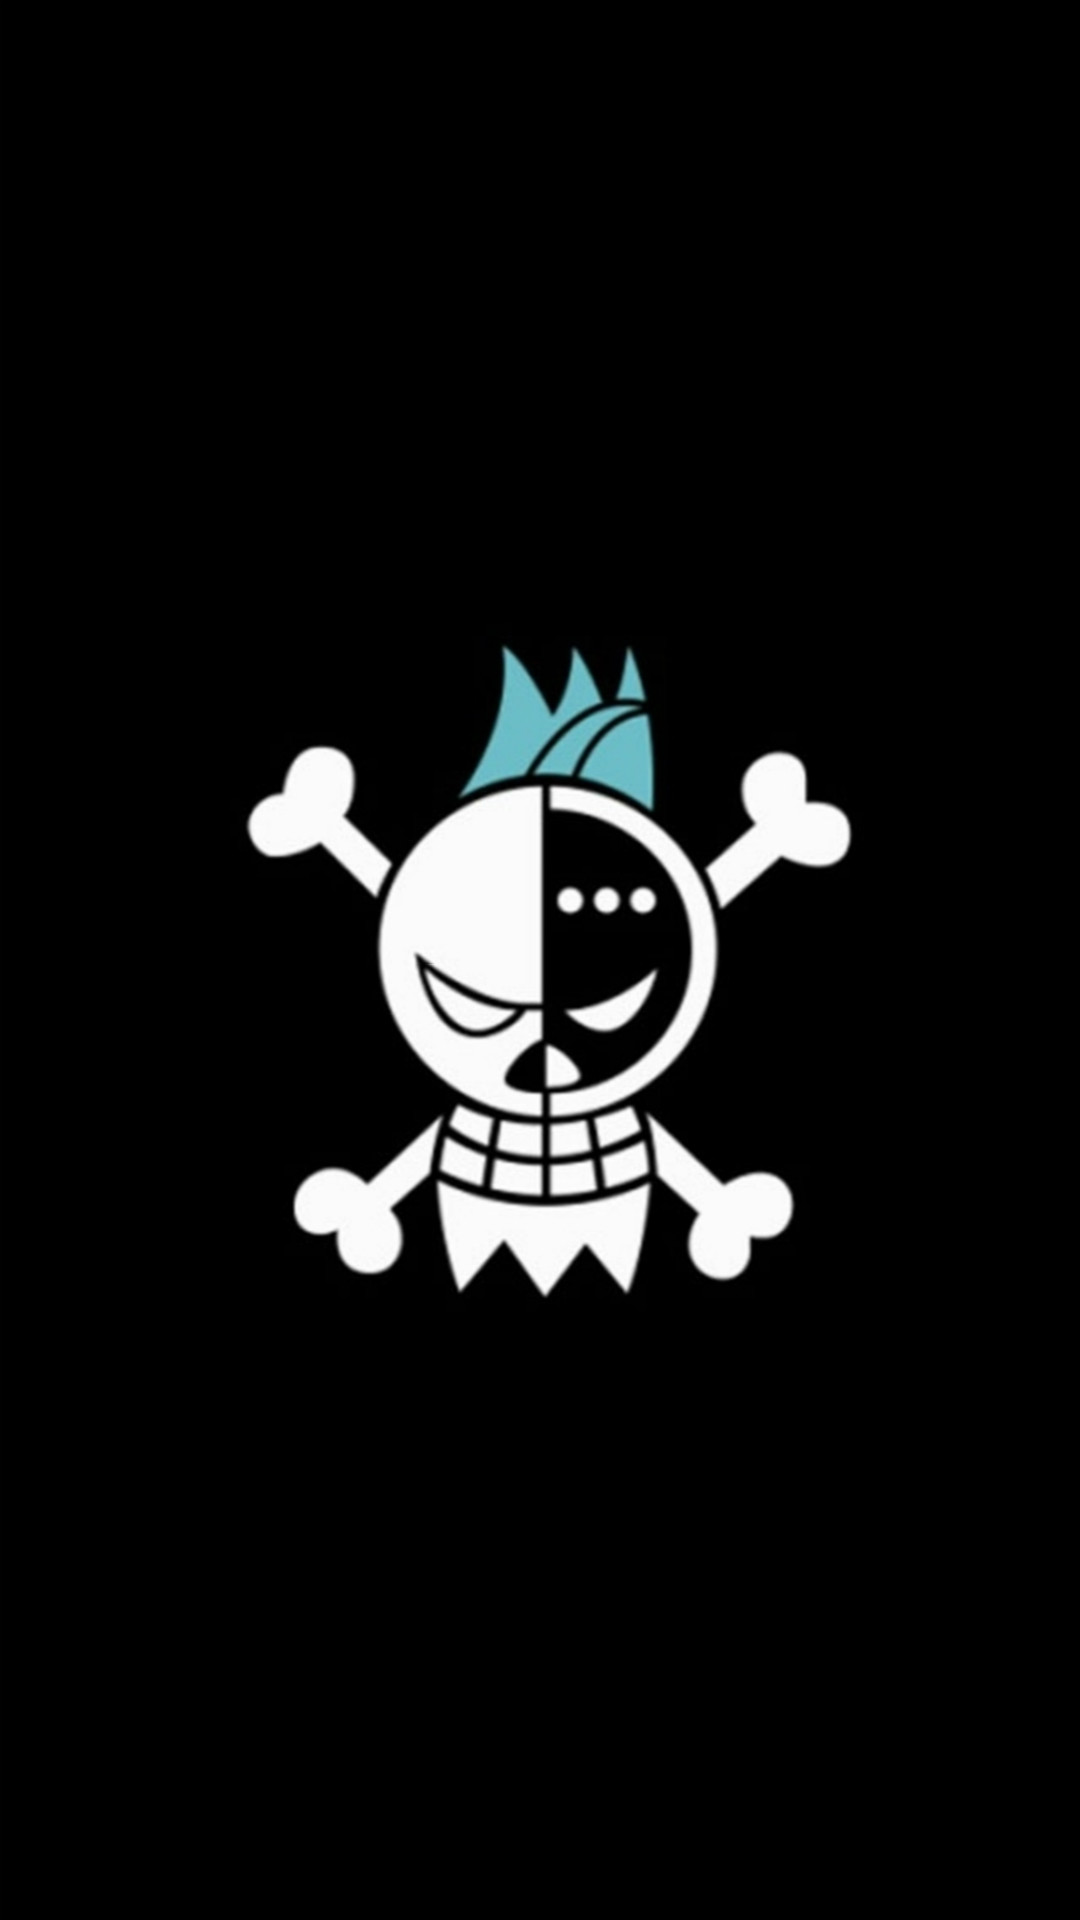 1080x1920 Fun Pirate Skull Logo Pattern iPhone 6 wallpaper